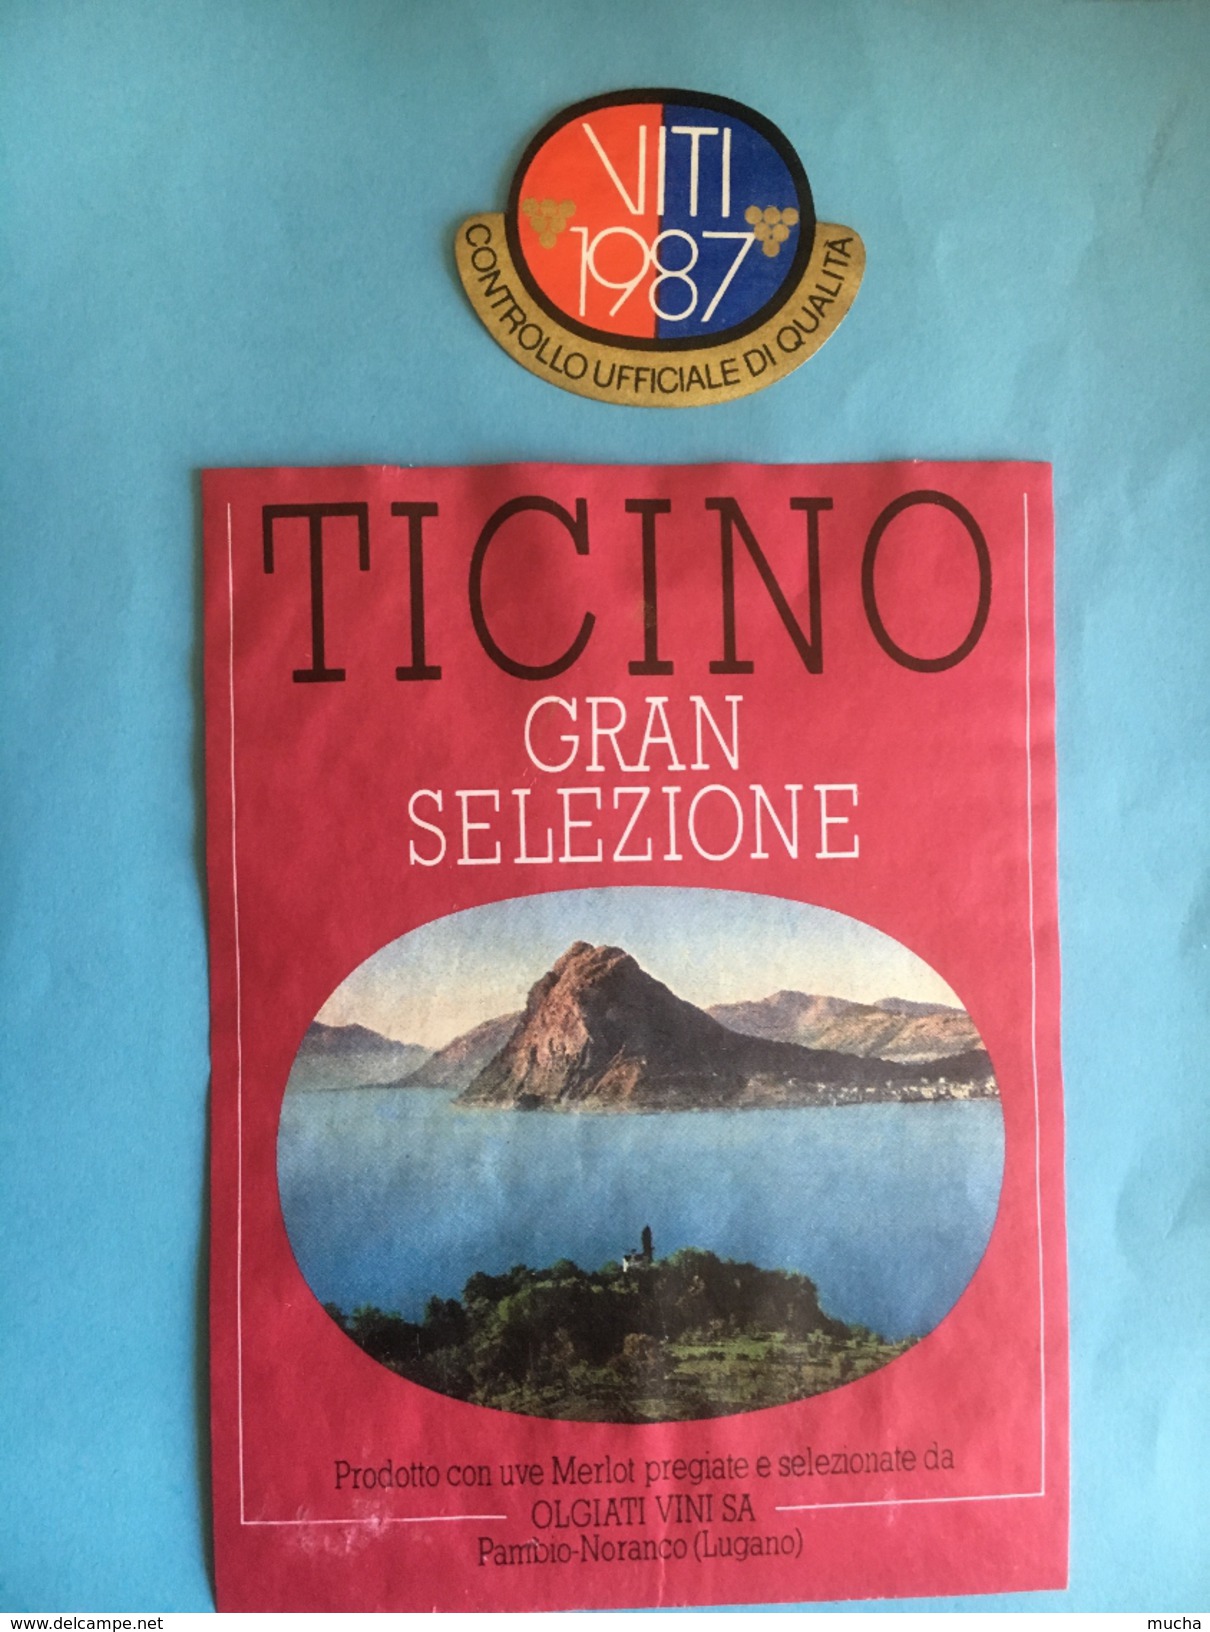 1490- Suisse Tessin Merlot Gran Selezione 1987 - Fiori